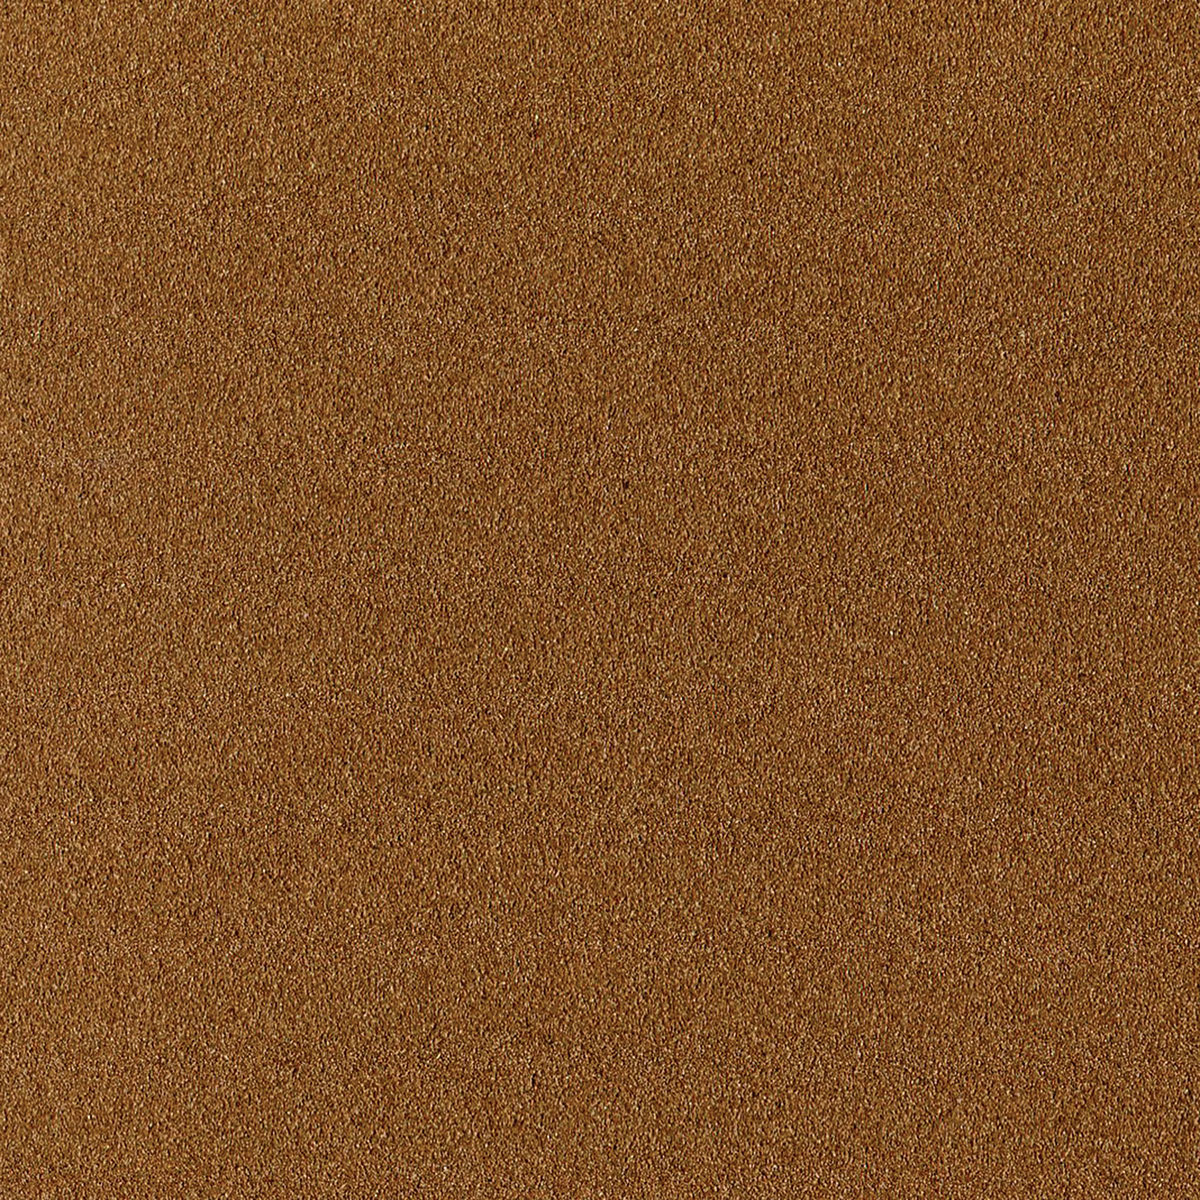 Pastelmat Pad - Palette No. 1, 12 x 15-3/4